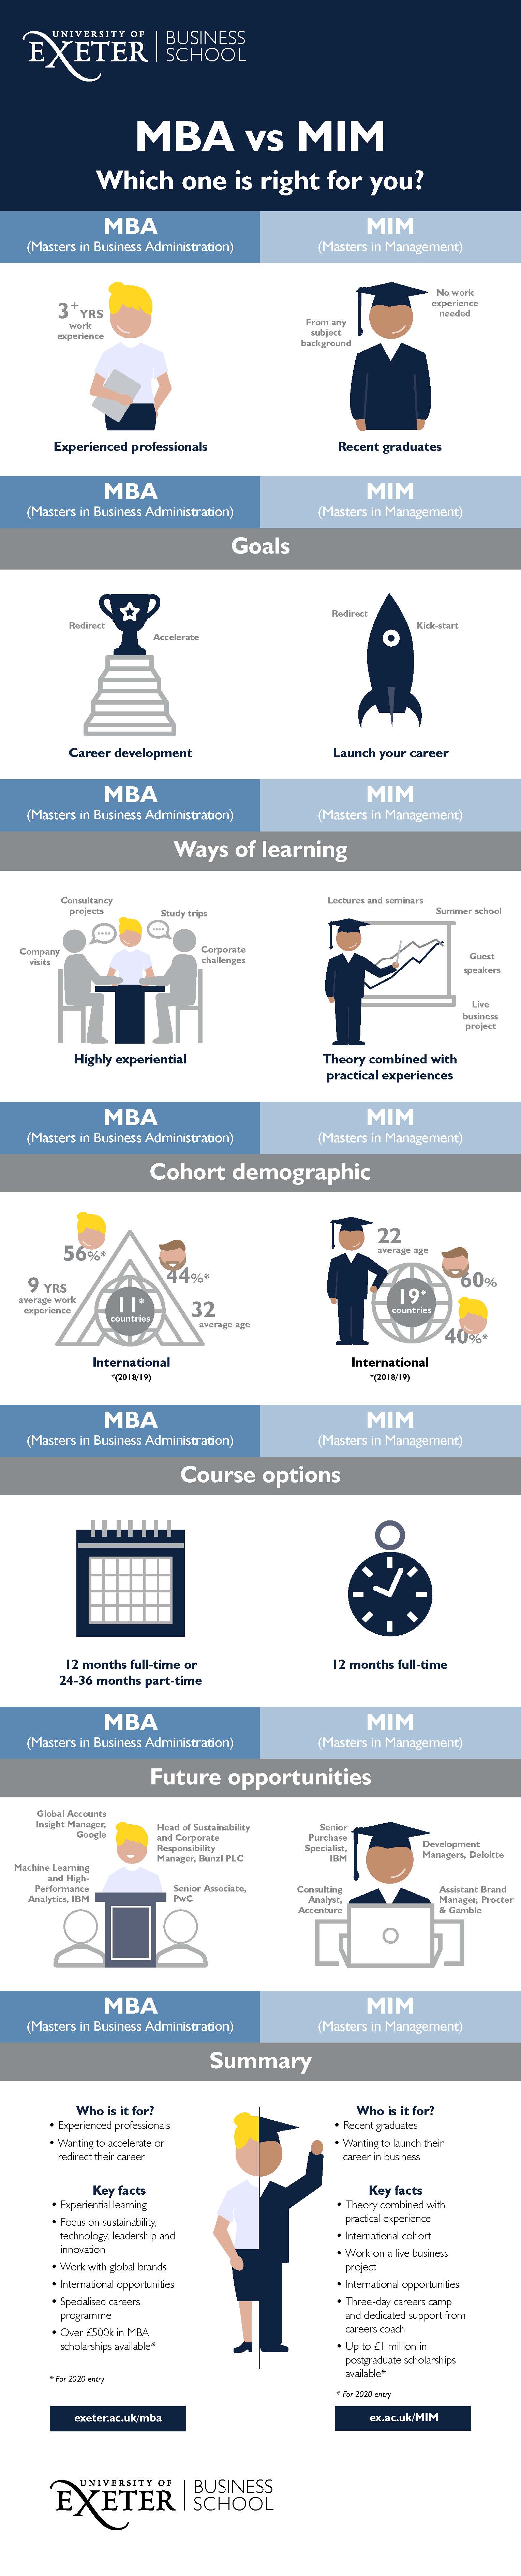 MBA v MIM Infographic FINAL